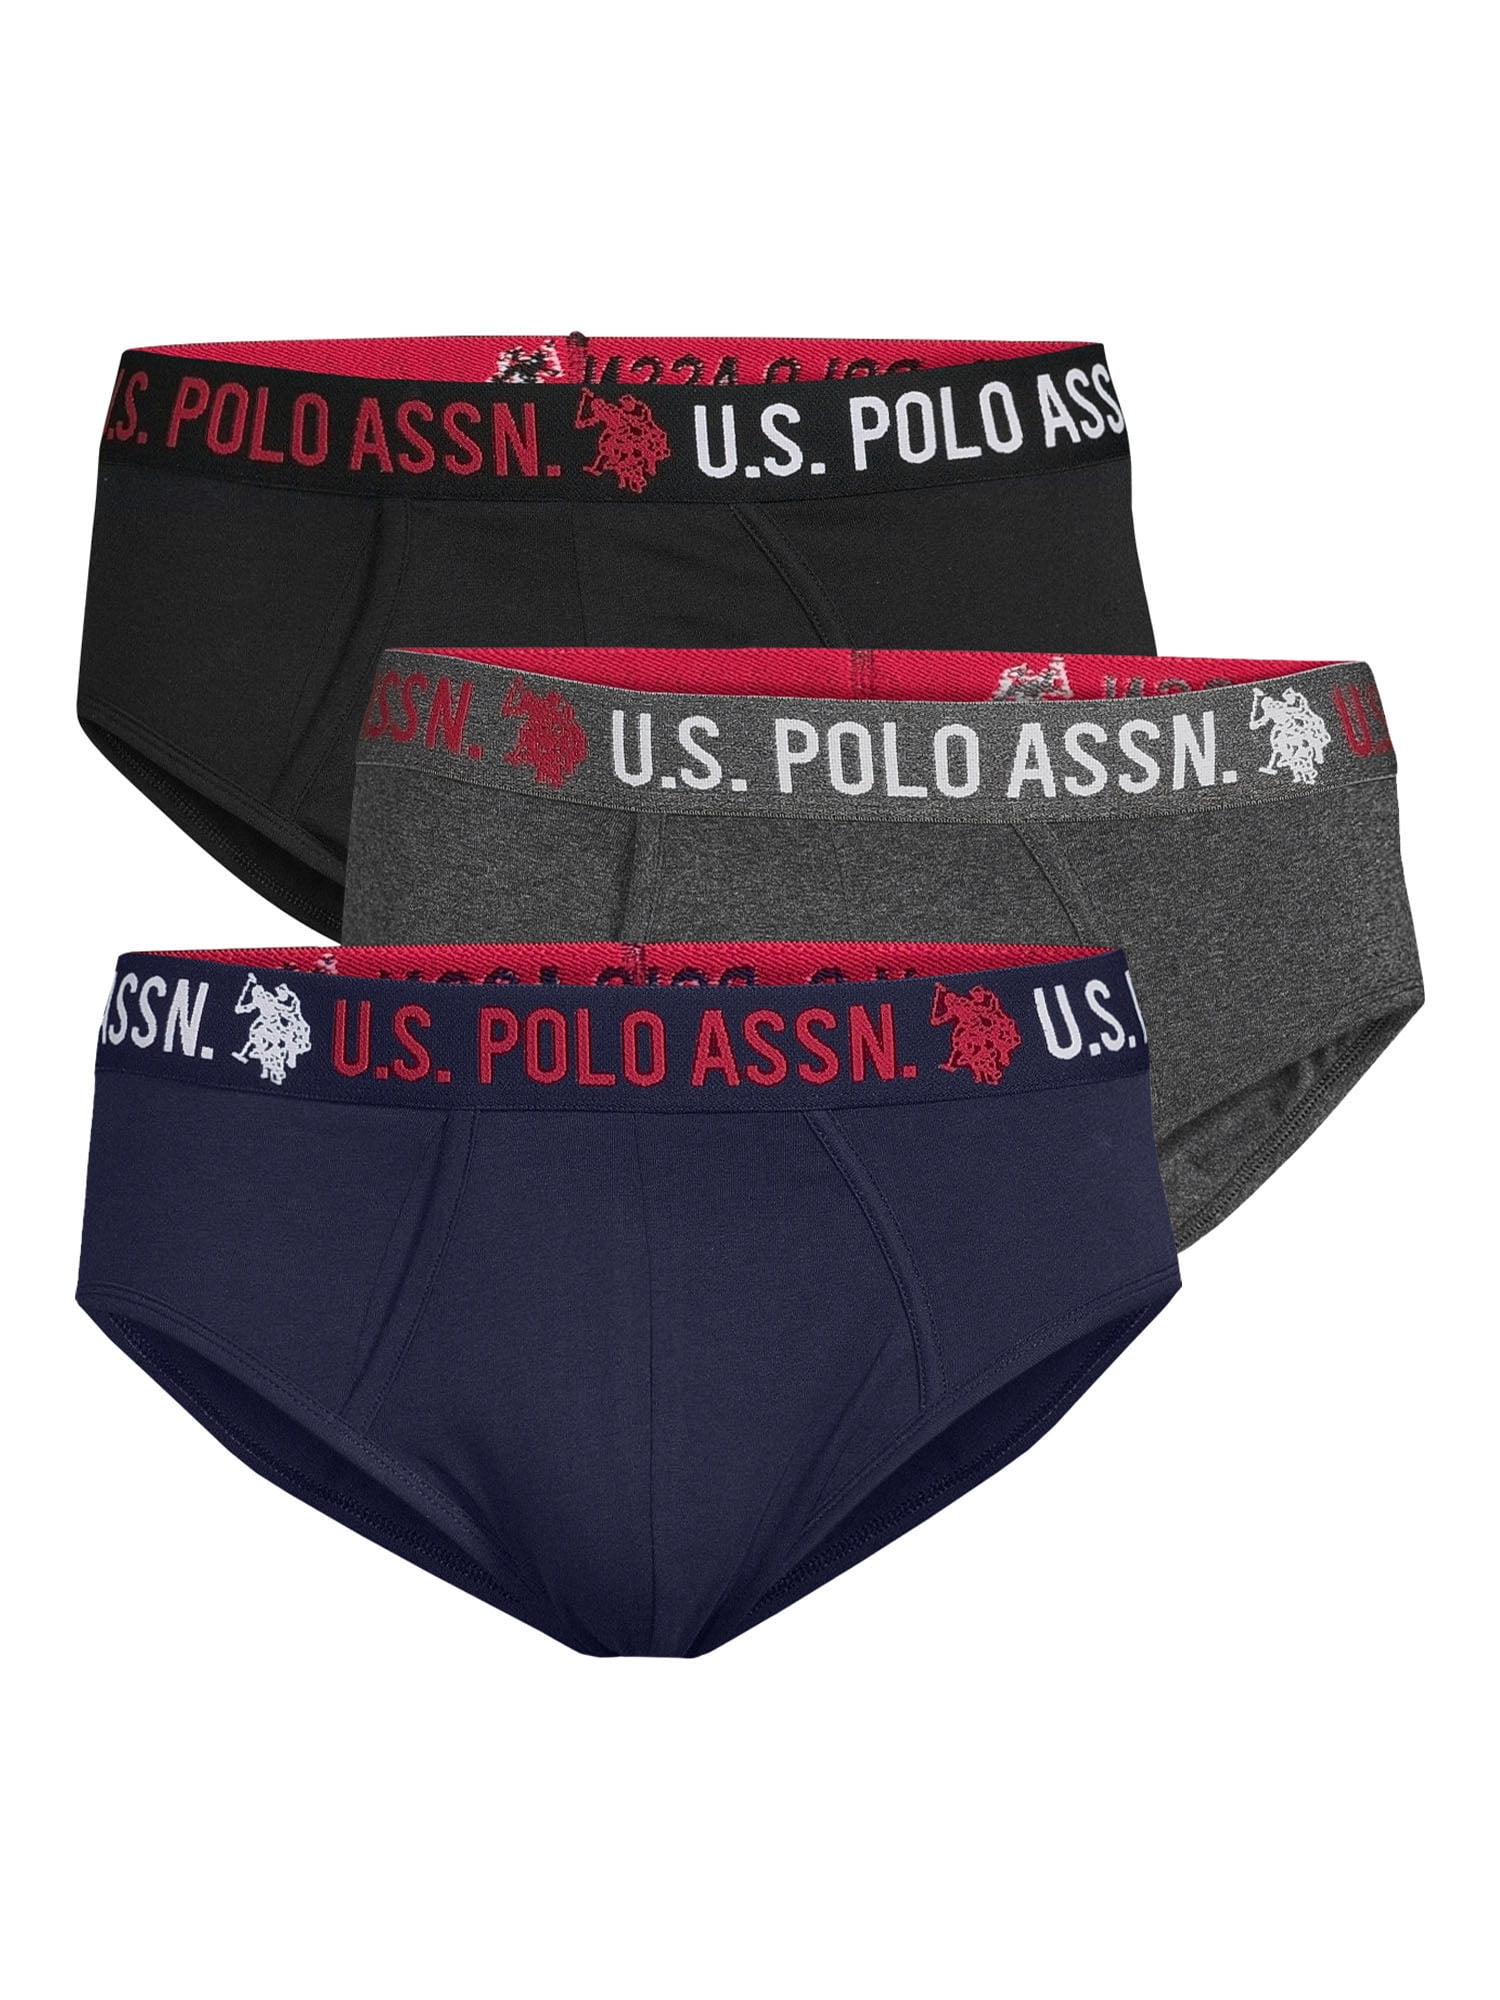 U.S. Polo Assn. Men's Cotton Stretch Briefs, 3-Pack